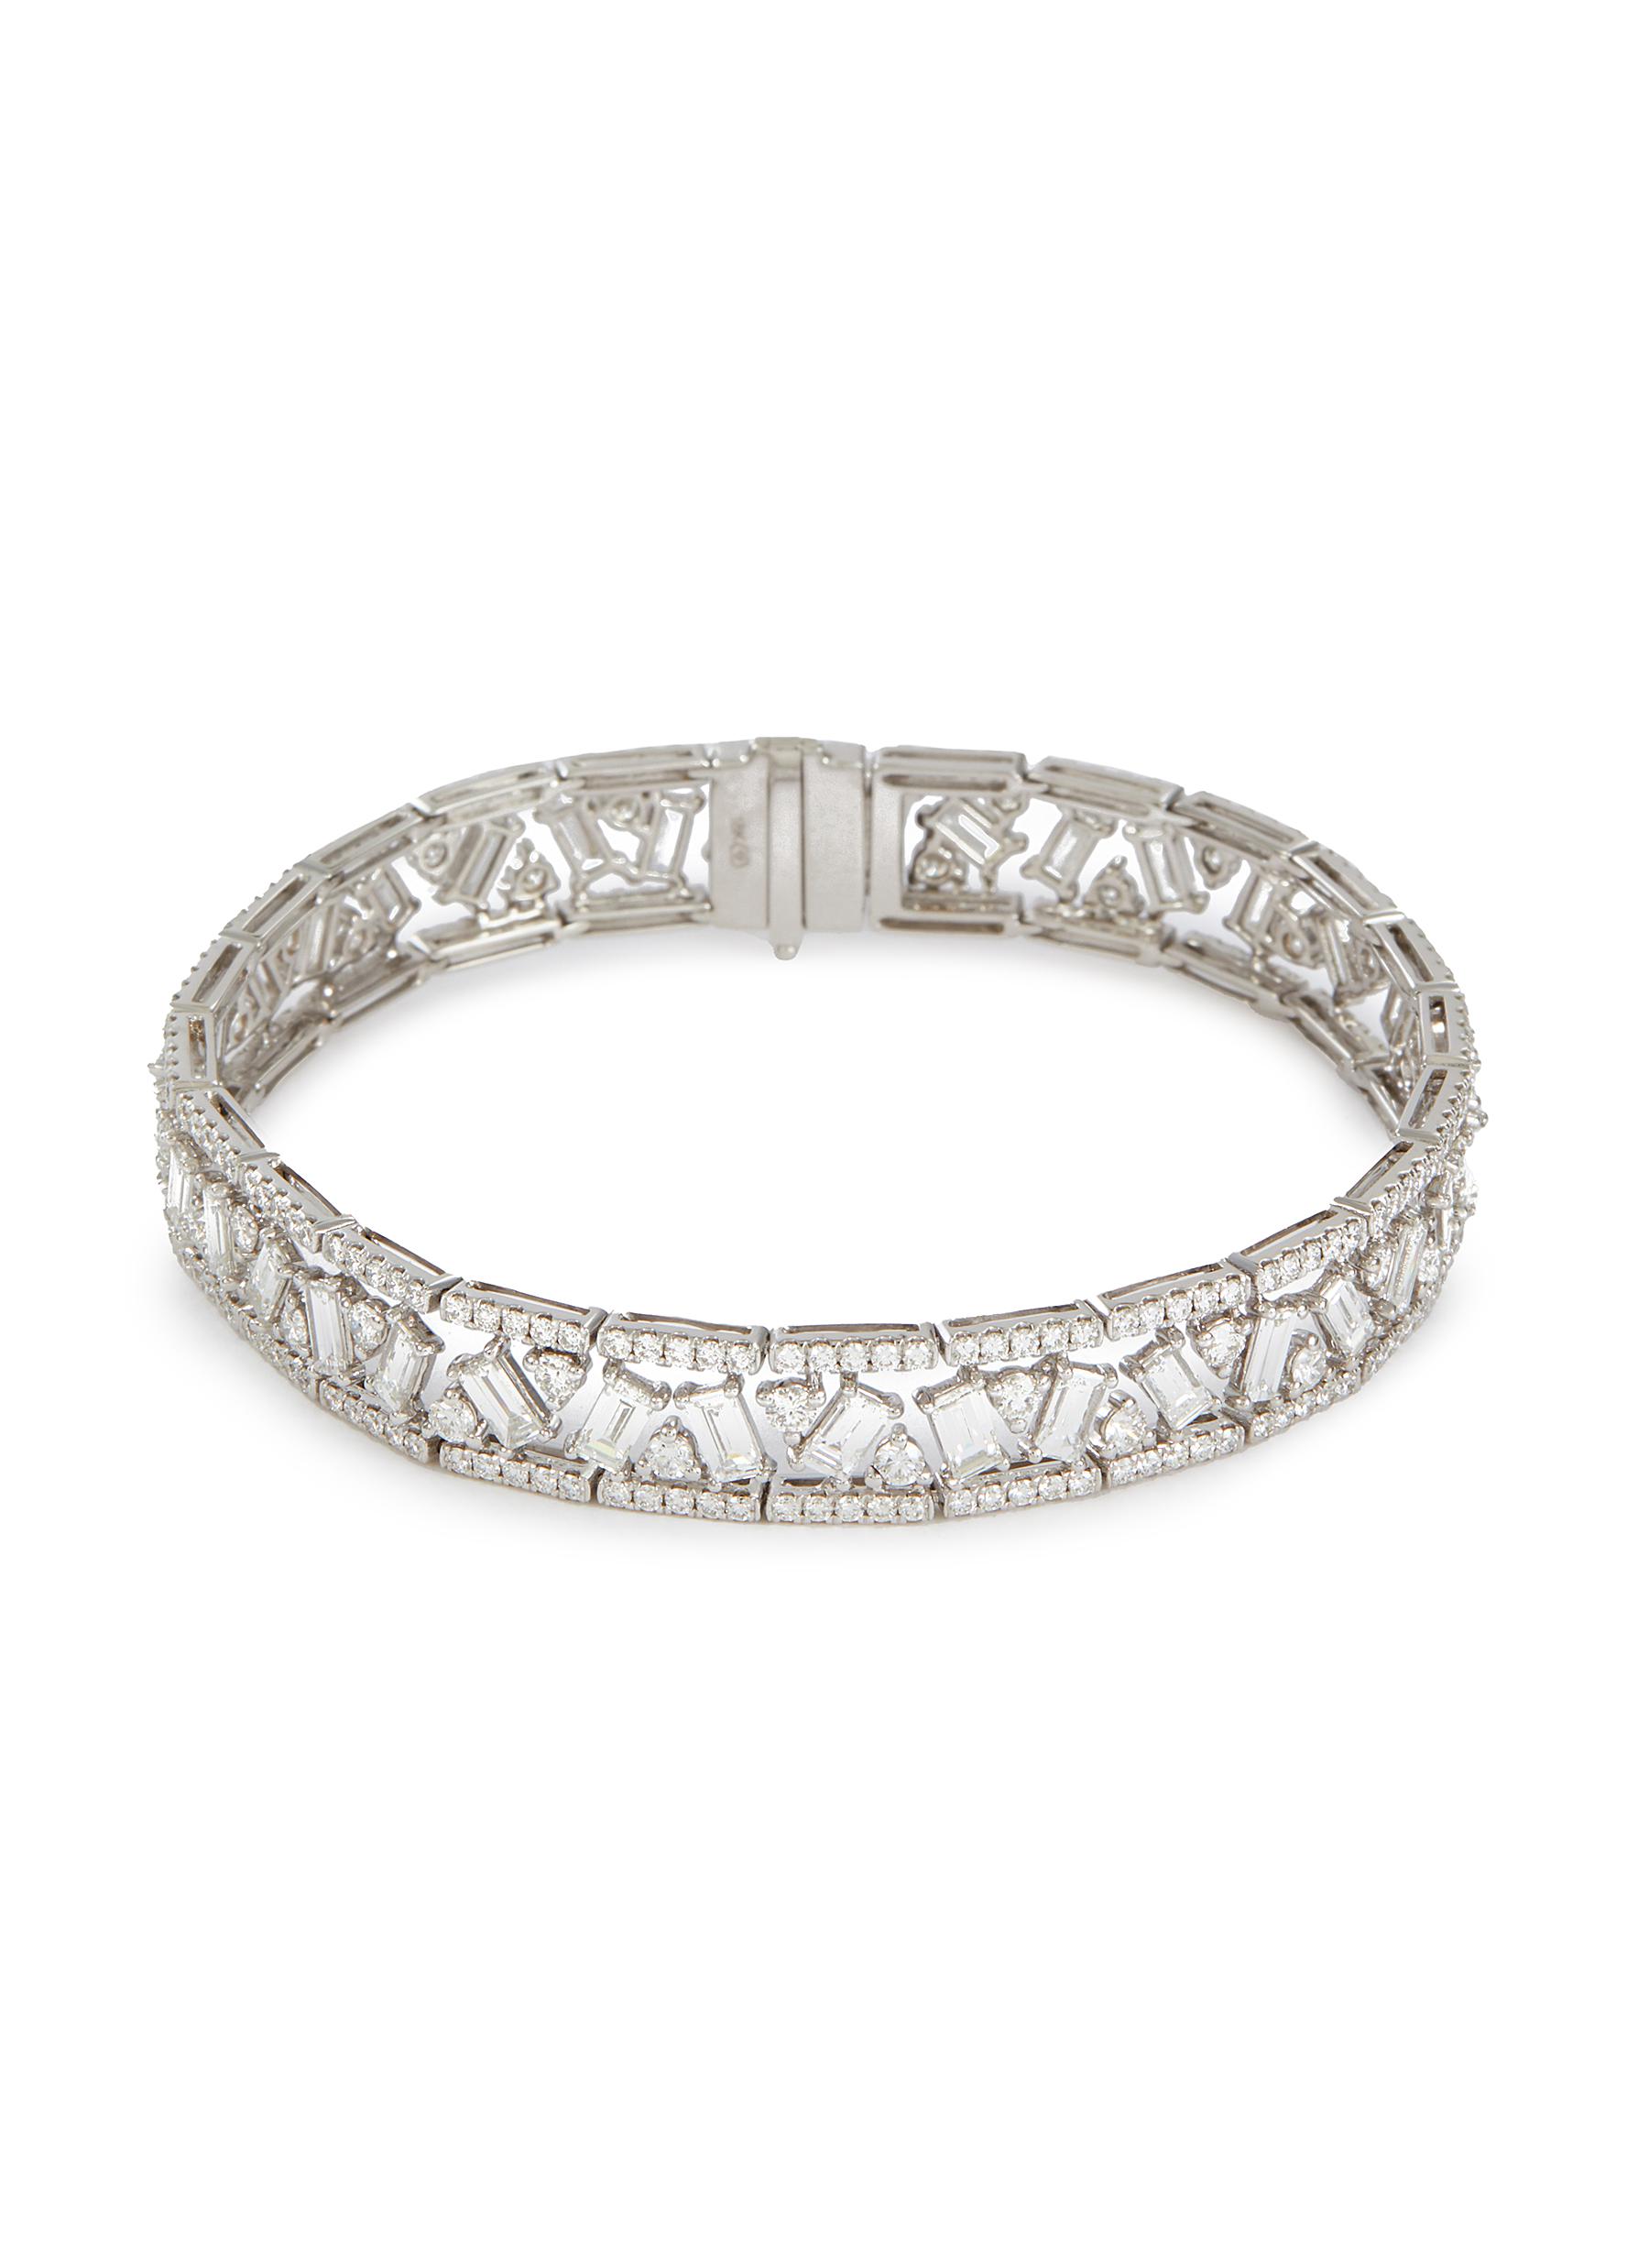 Classic Diamond Tennis Bracelet | Tennis bracelet diamond, Diamond bracelet  design, Bracelet size chart